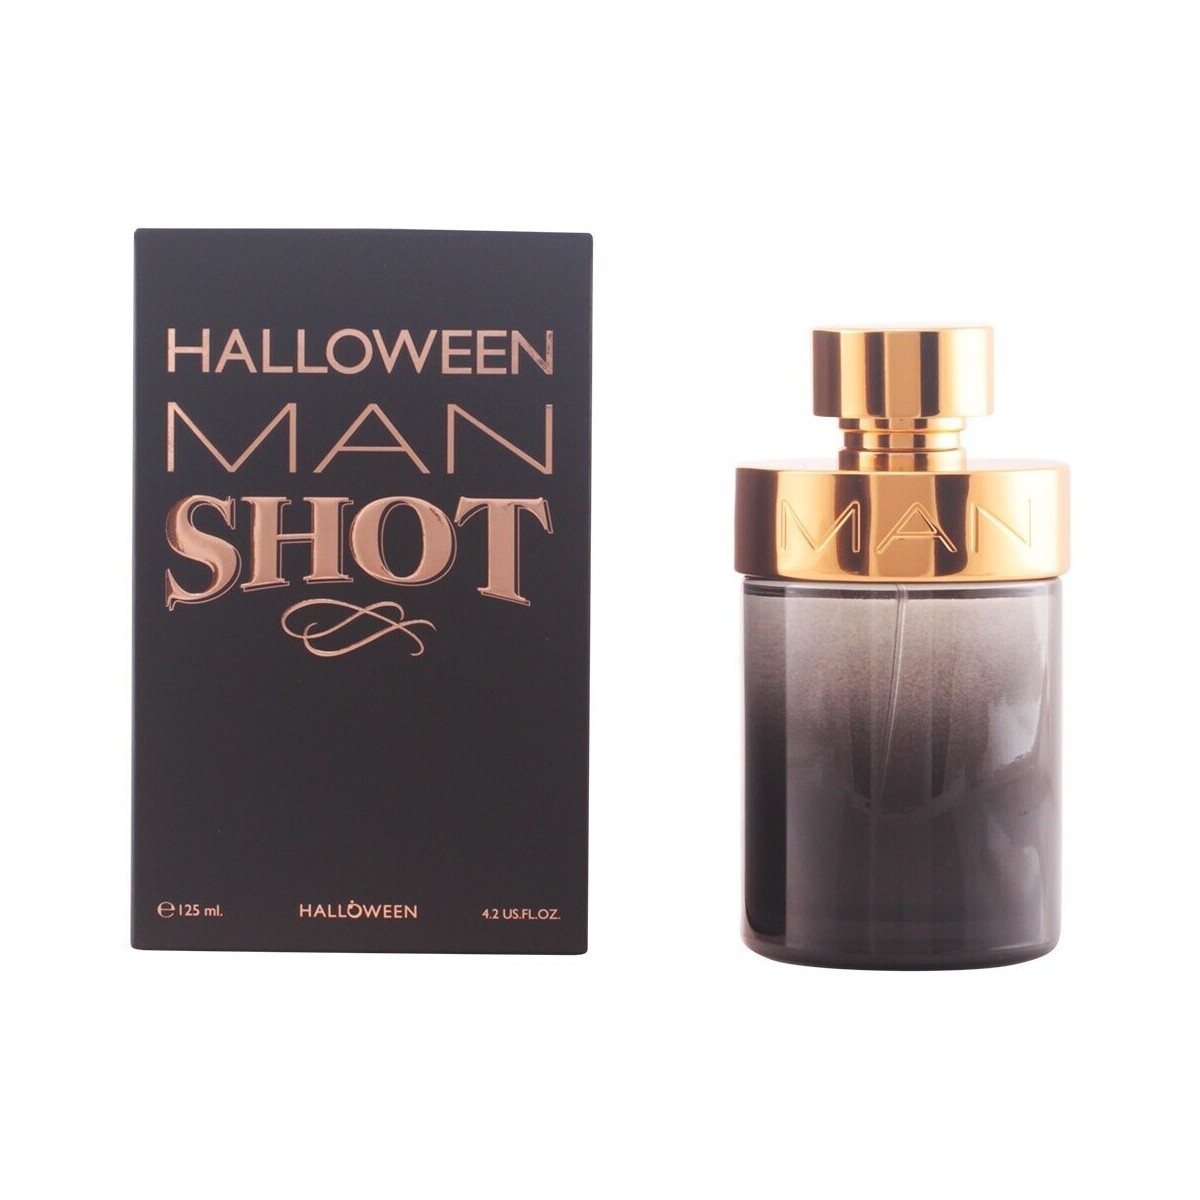 Belleza Hombre Colonia Jesus Del Pozo Halloween Man Shot - Eau de Toilette - 125ml Halloween Man Shot - cologne - 125ml